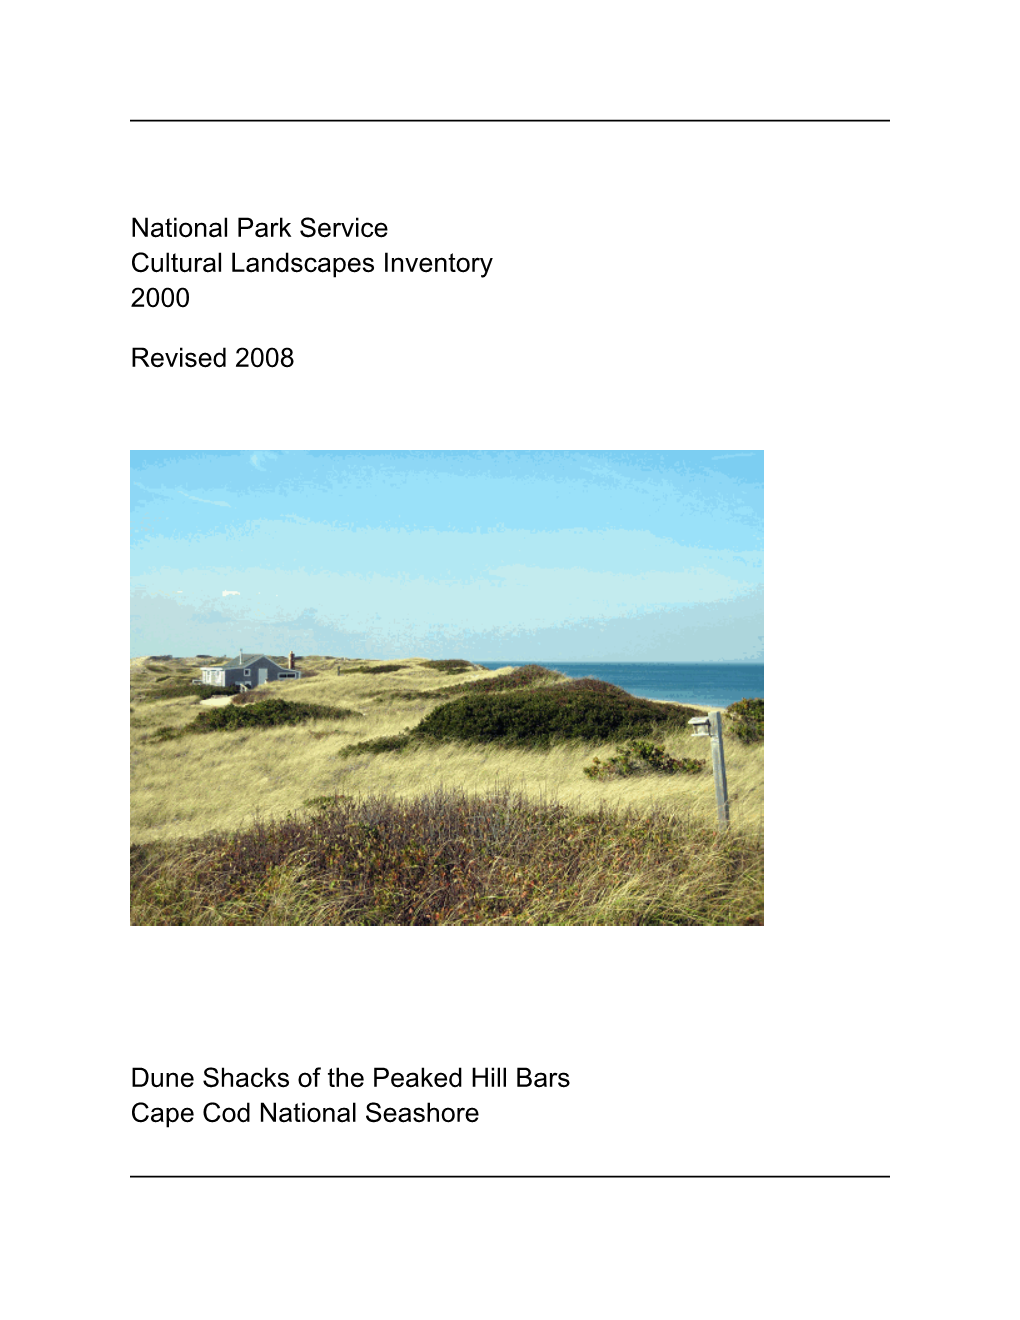 National Park Service Cultural Landscapes Inventory 2000 Dune